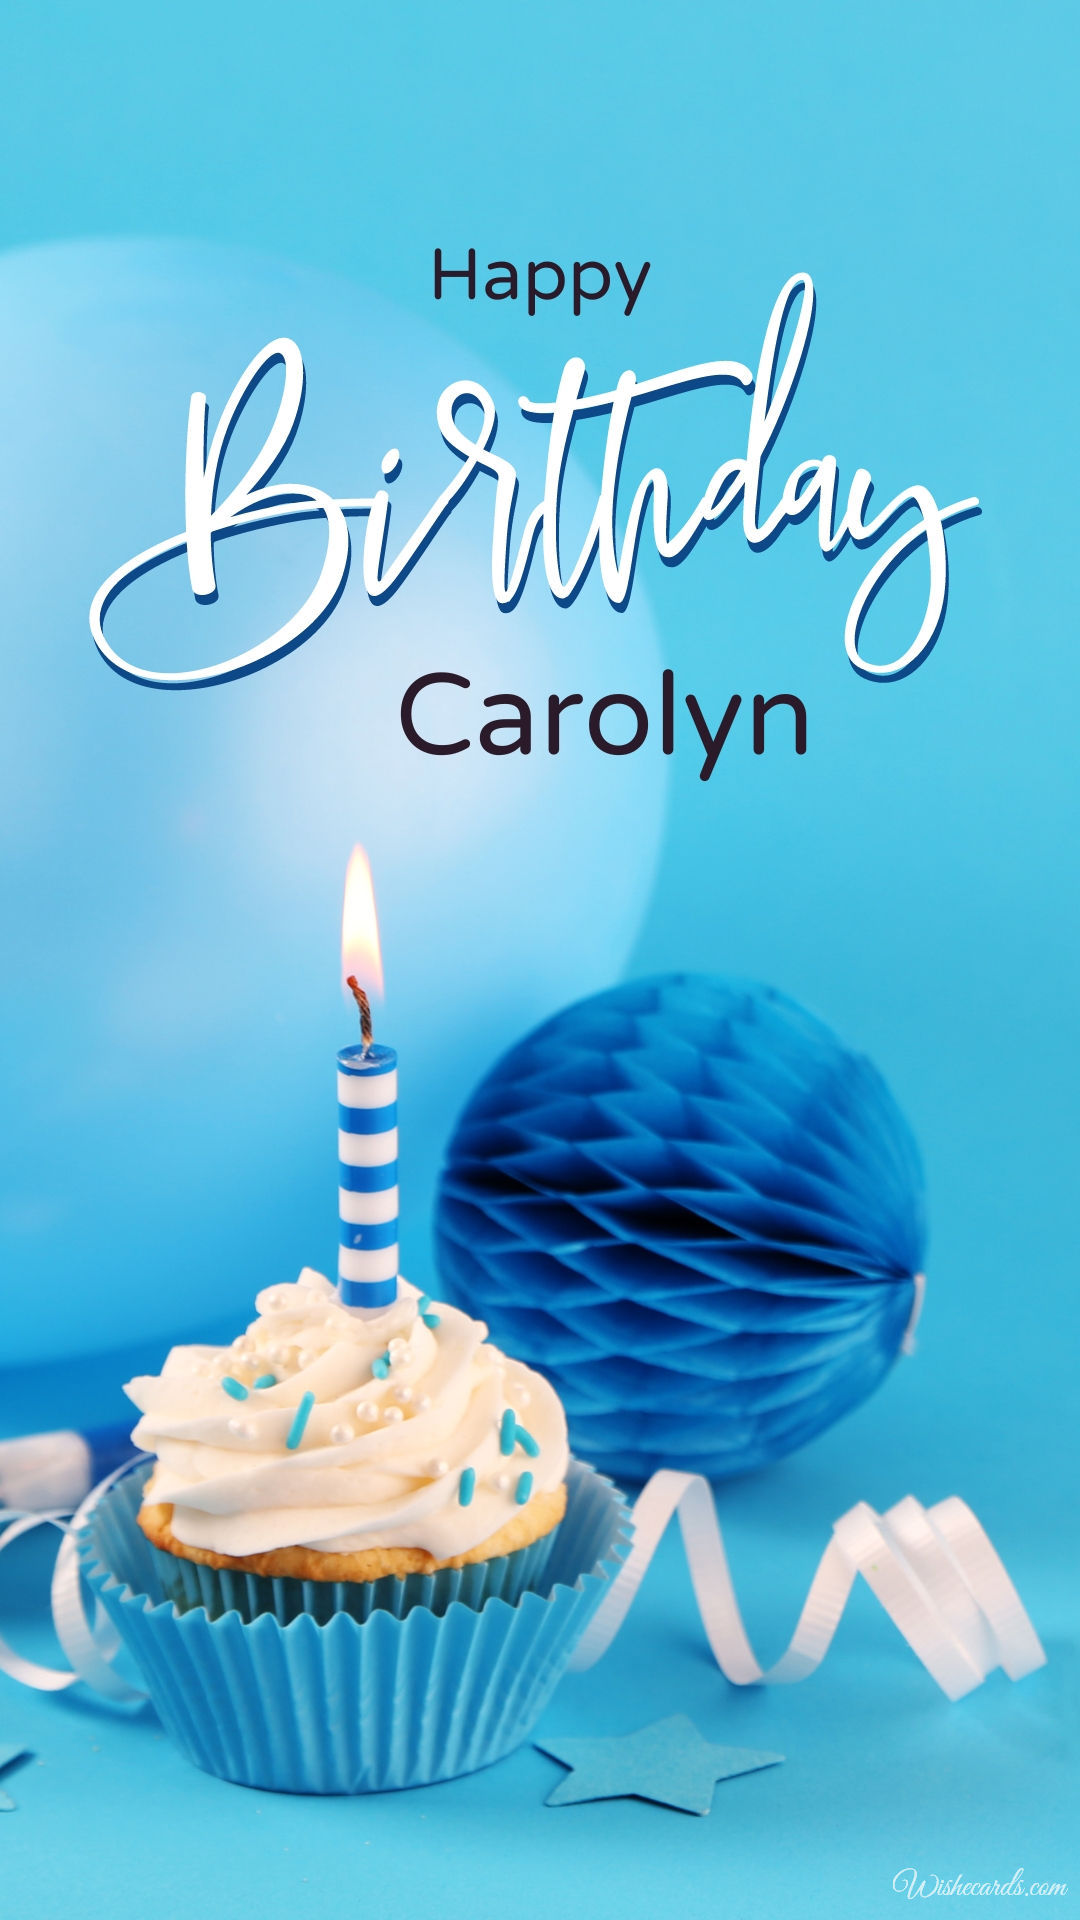 Happy Birthday Carolyn Cake Image